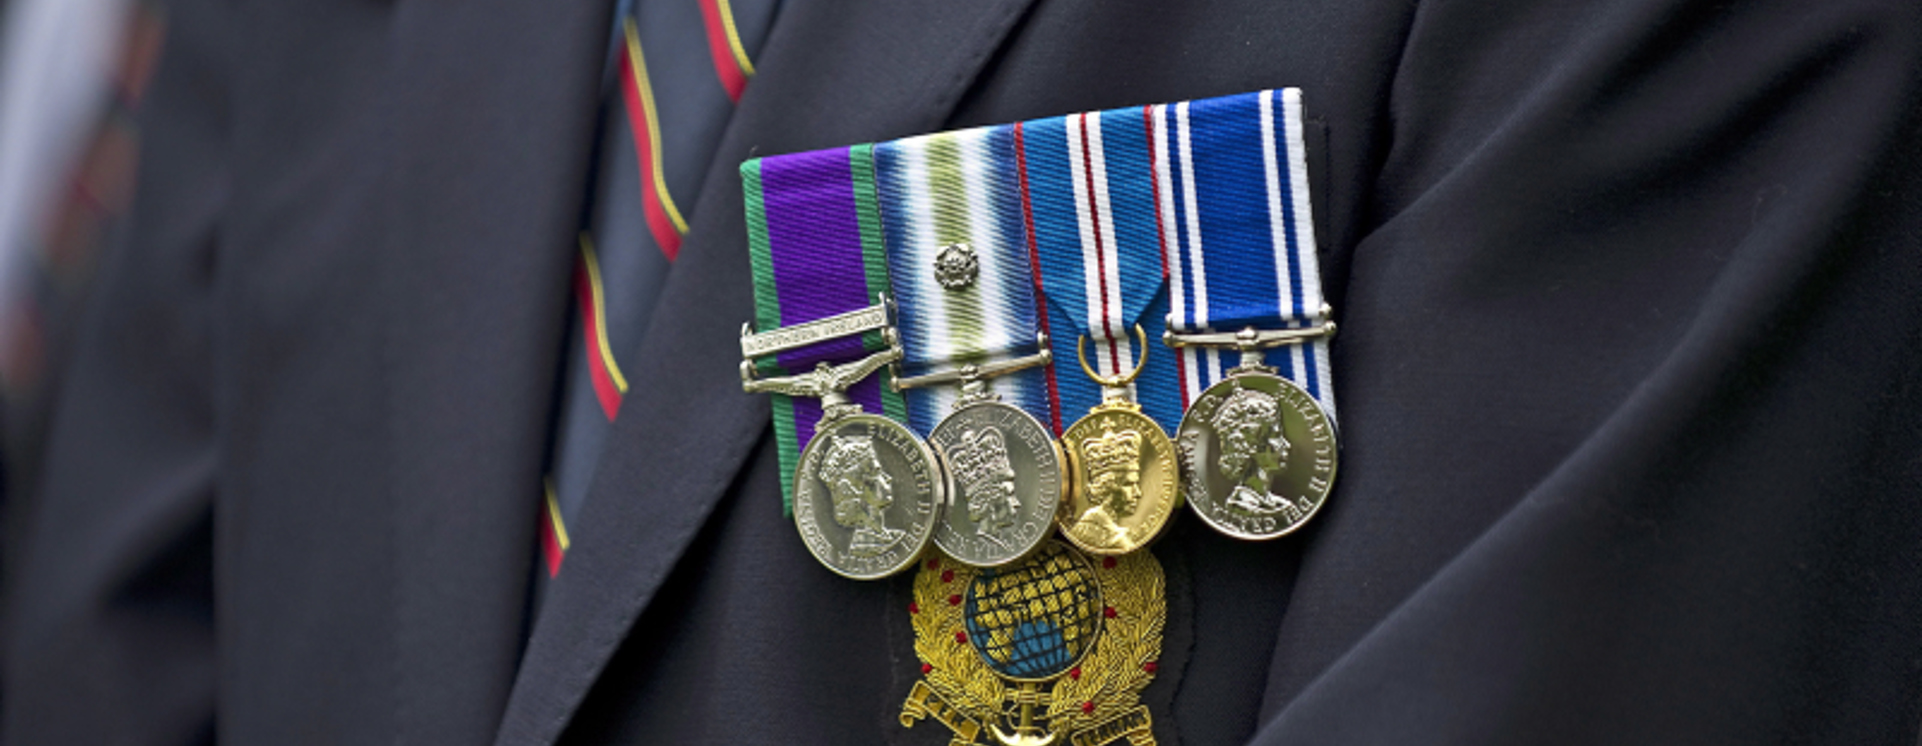 Veterans medal